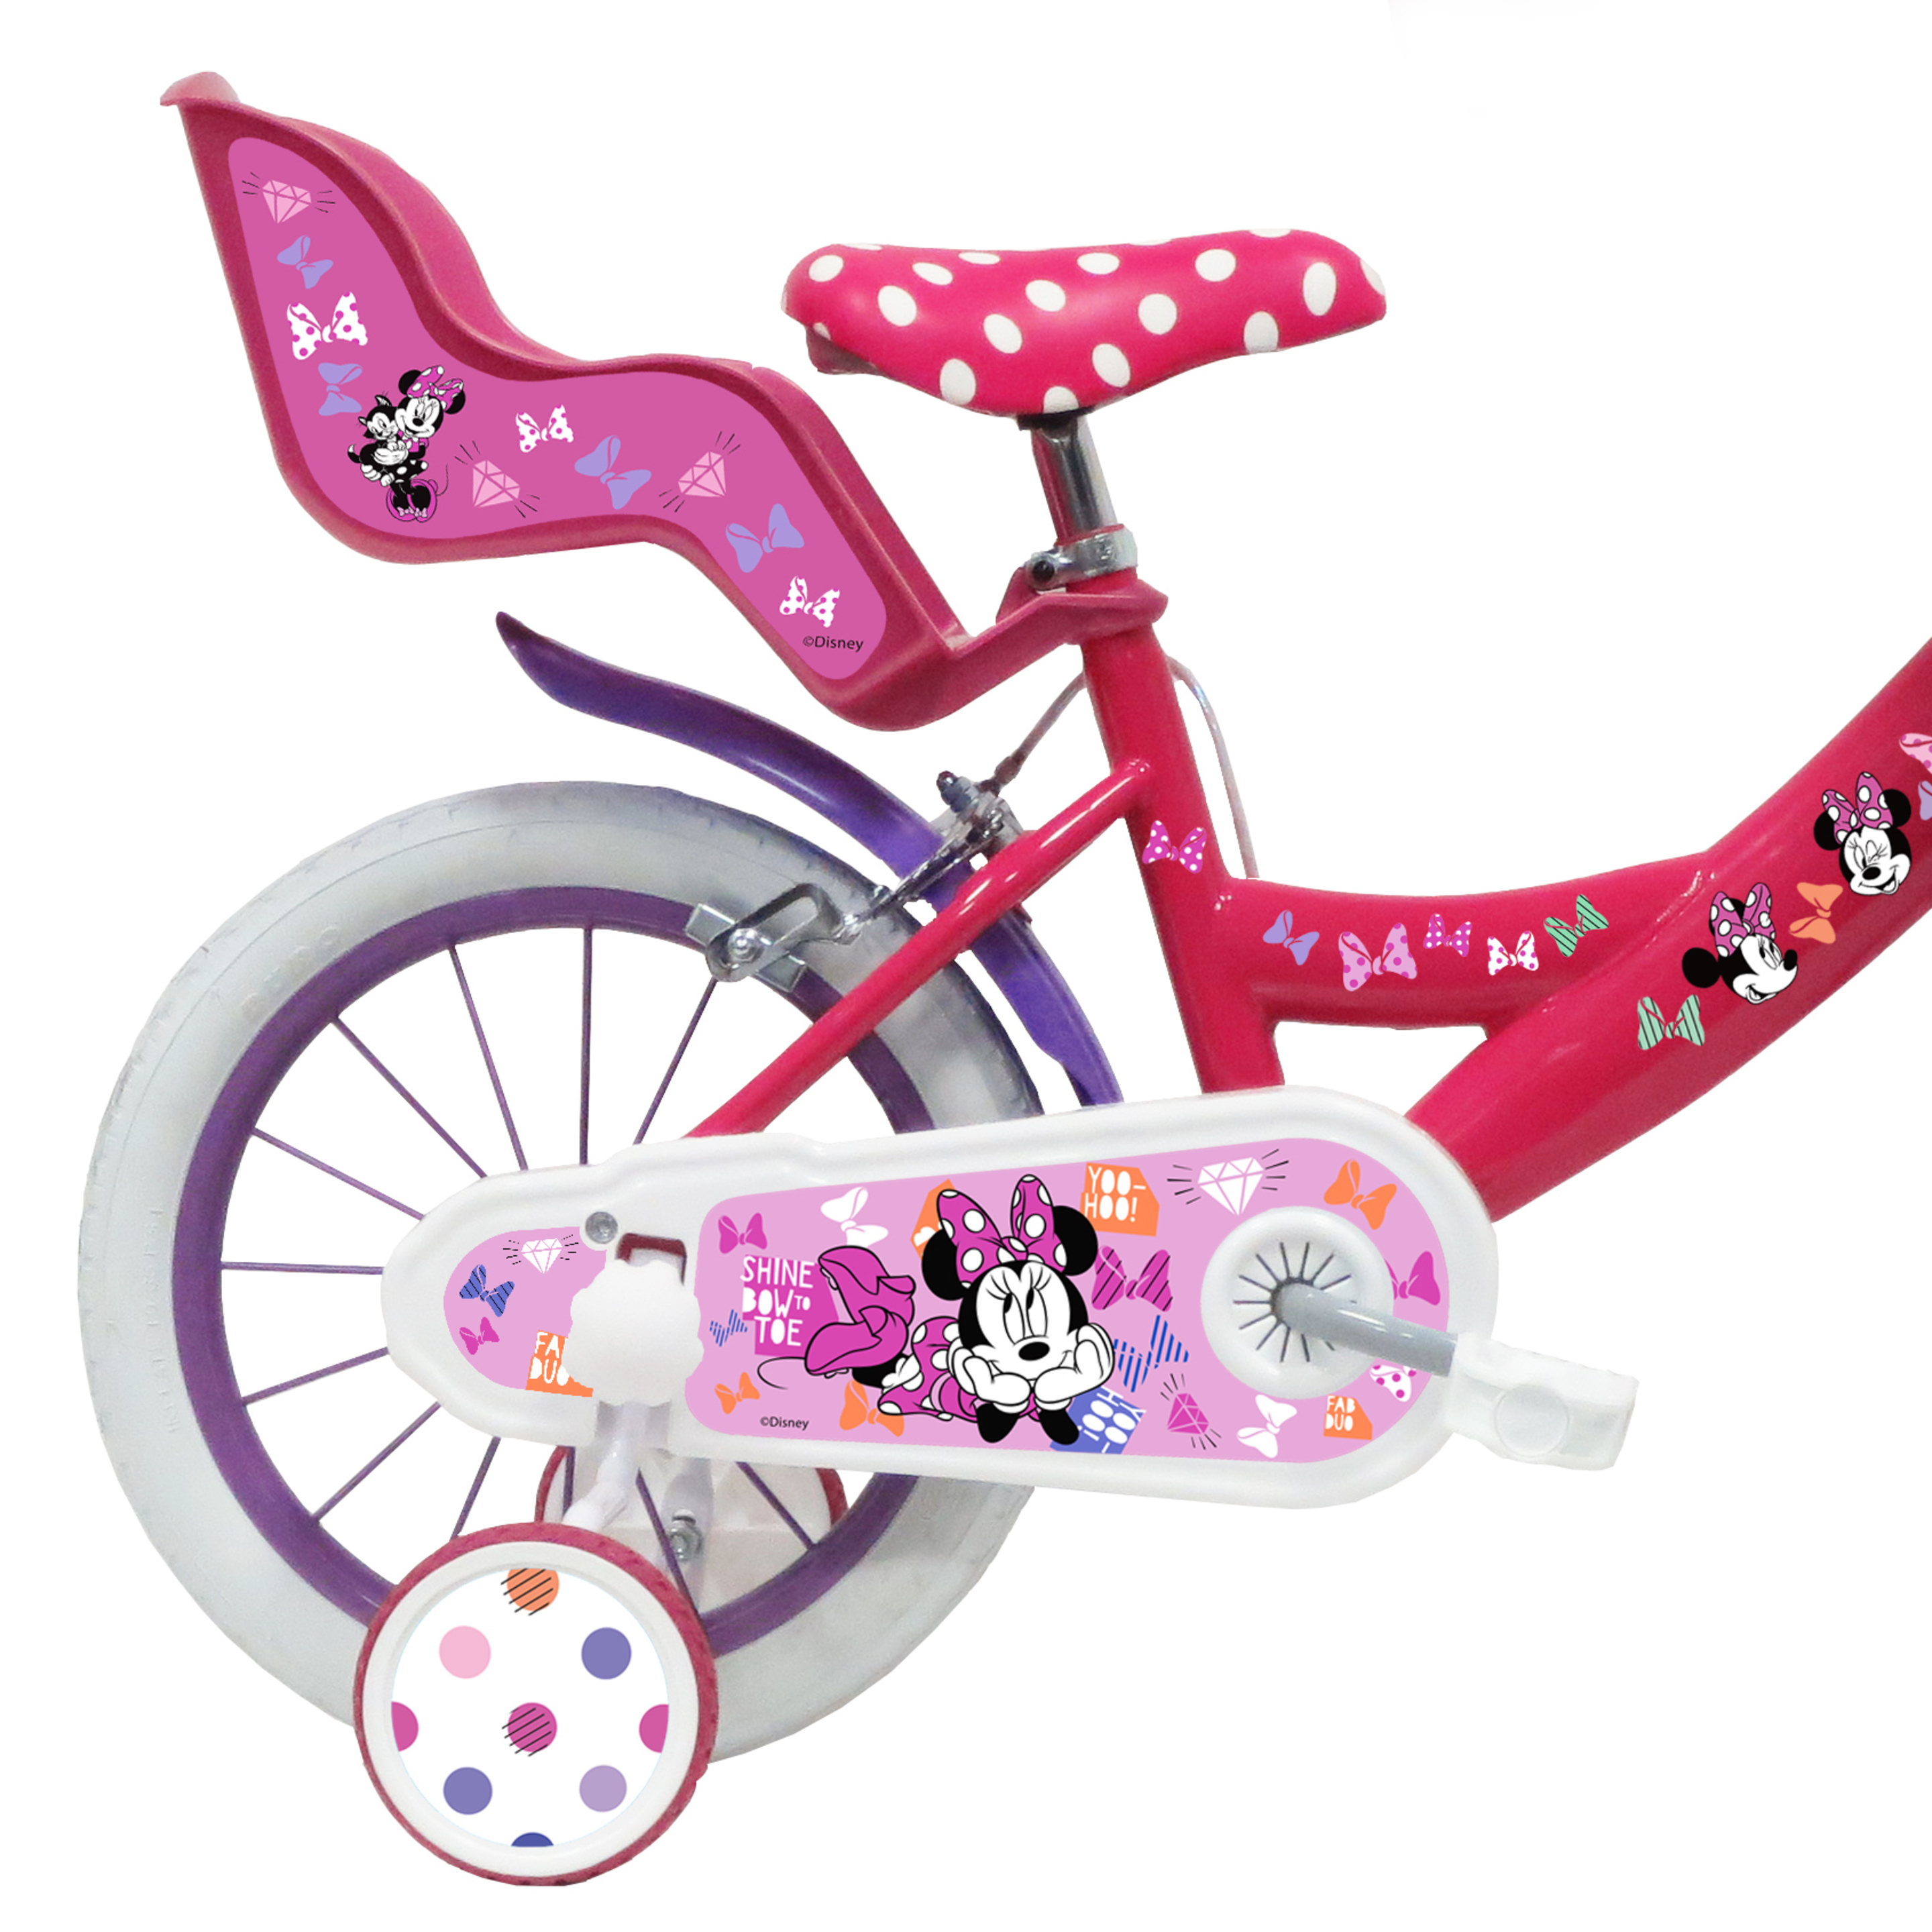 Bicicleta Niña 14 Pulgadas Minnie Mouse 4-6 Años